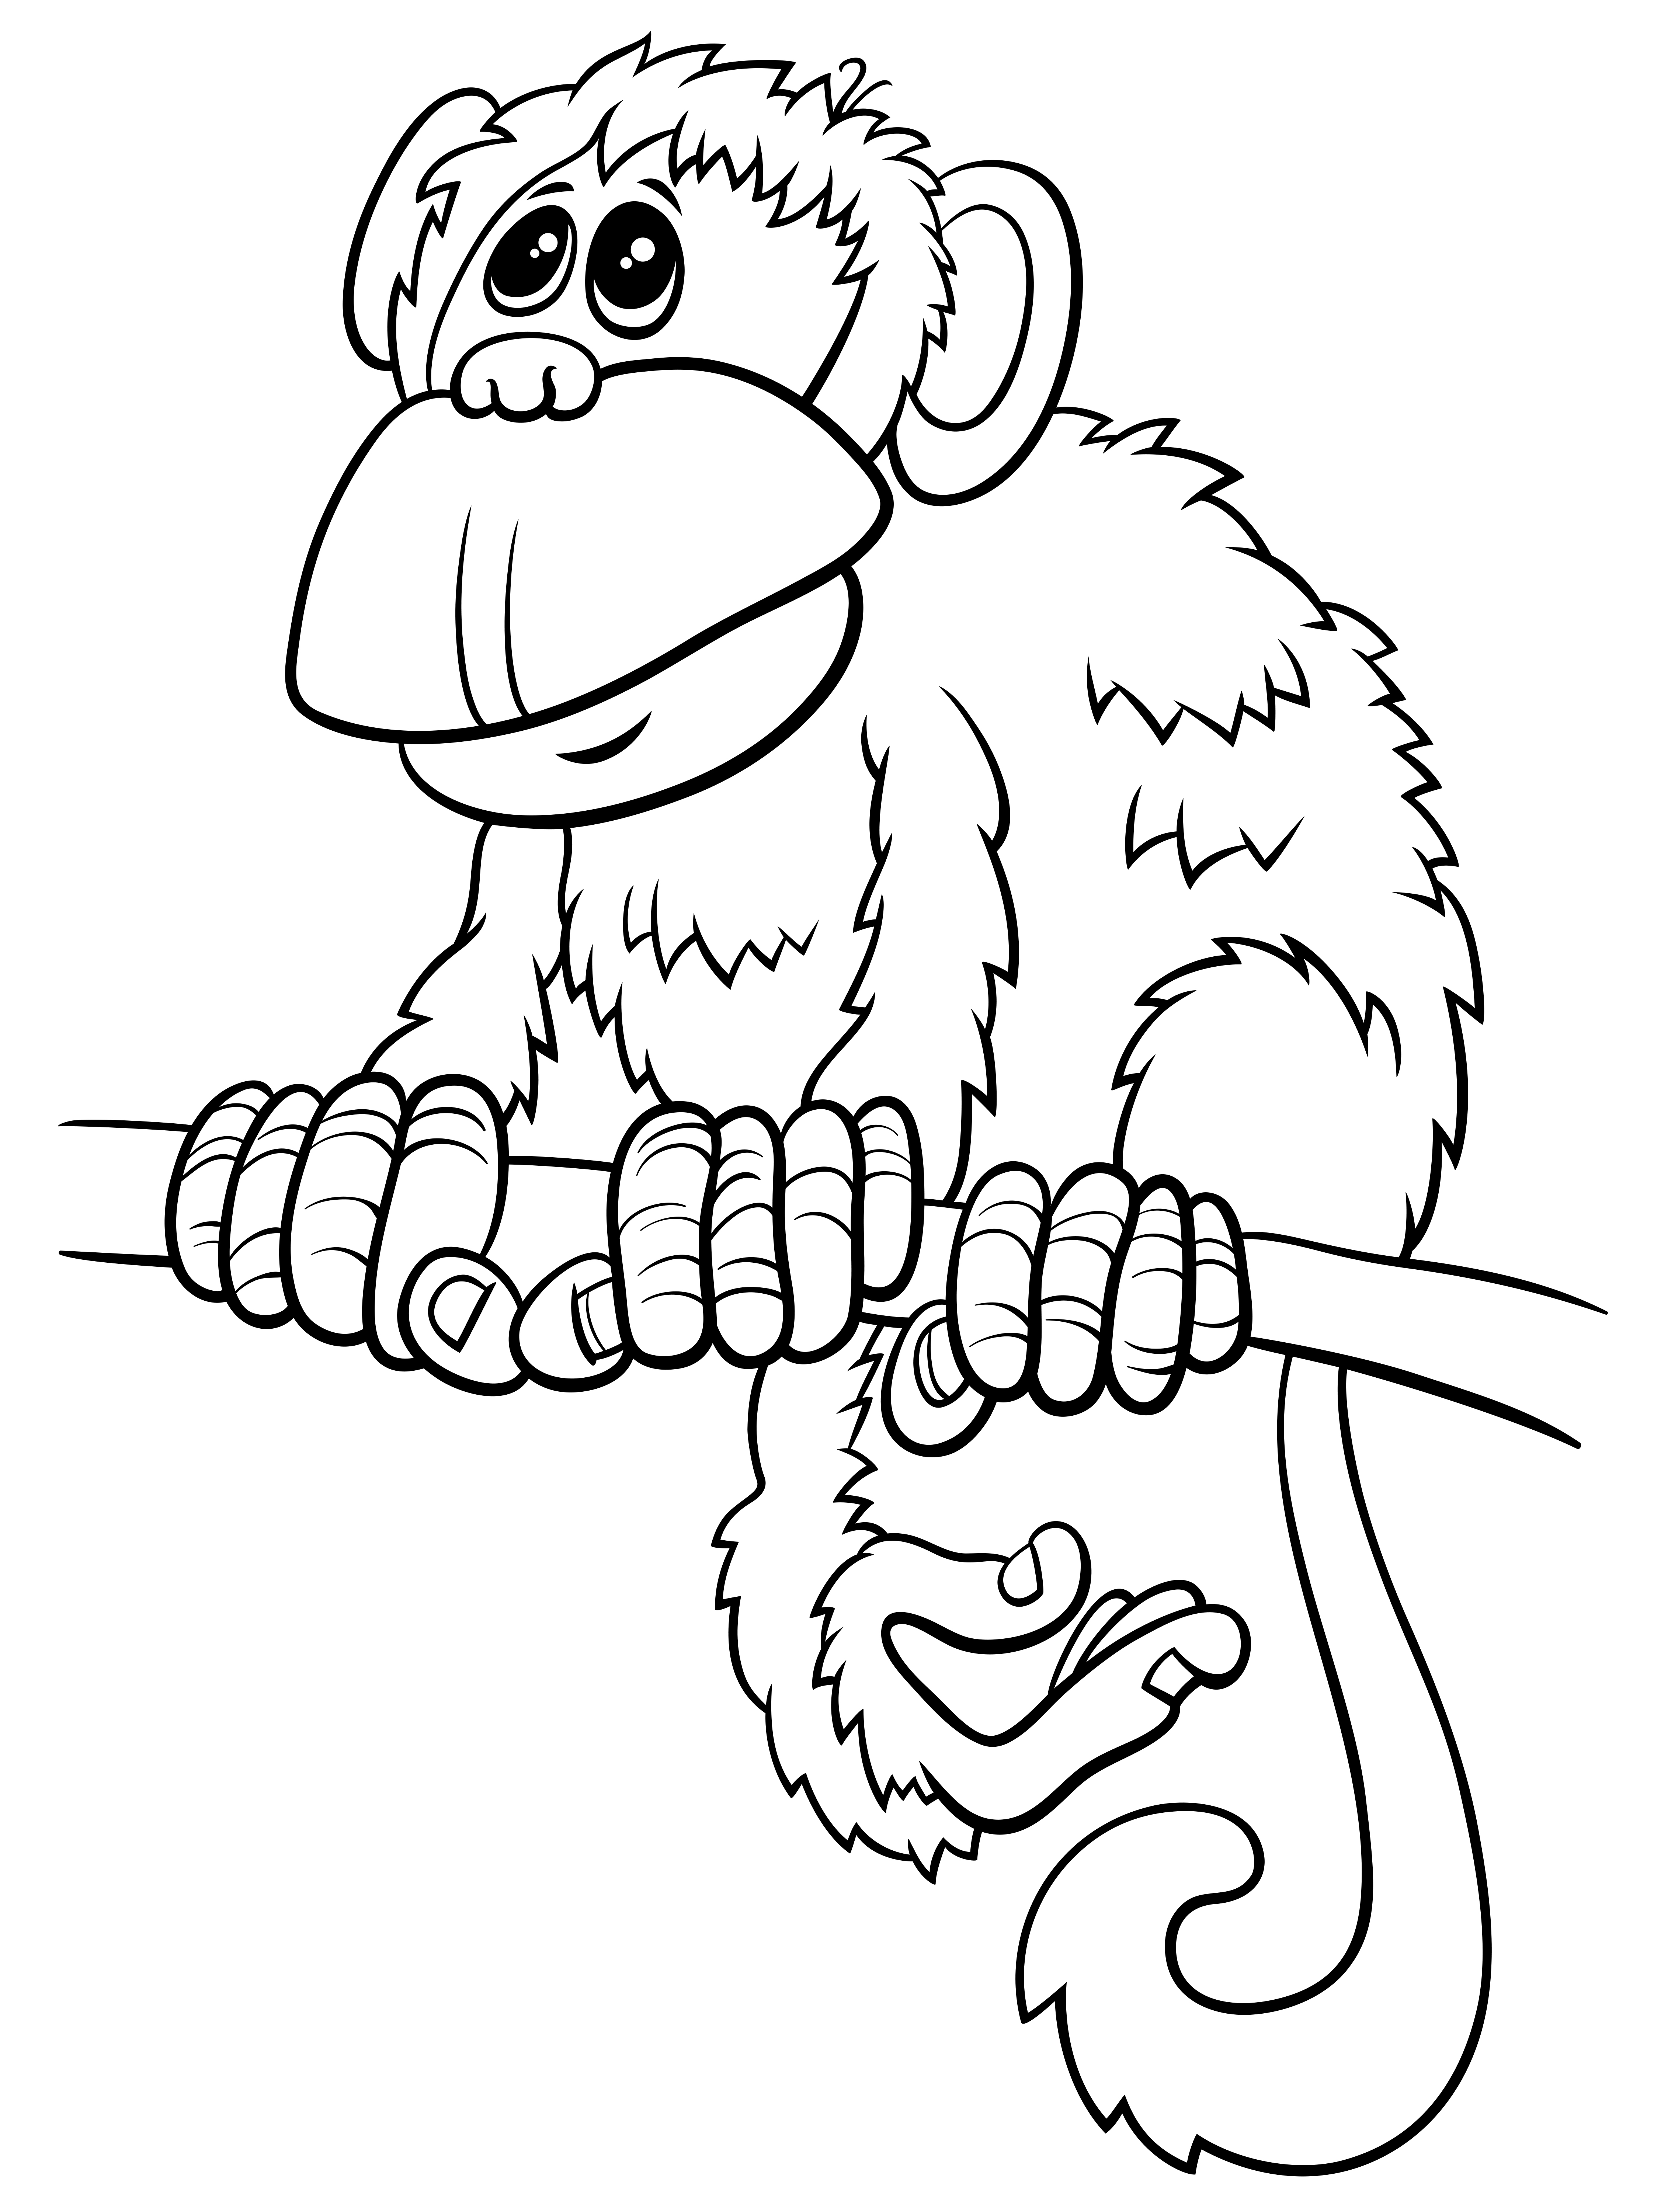 Macaco alegre para colorir - Imprimir Desenhos